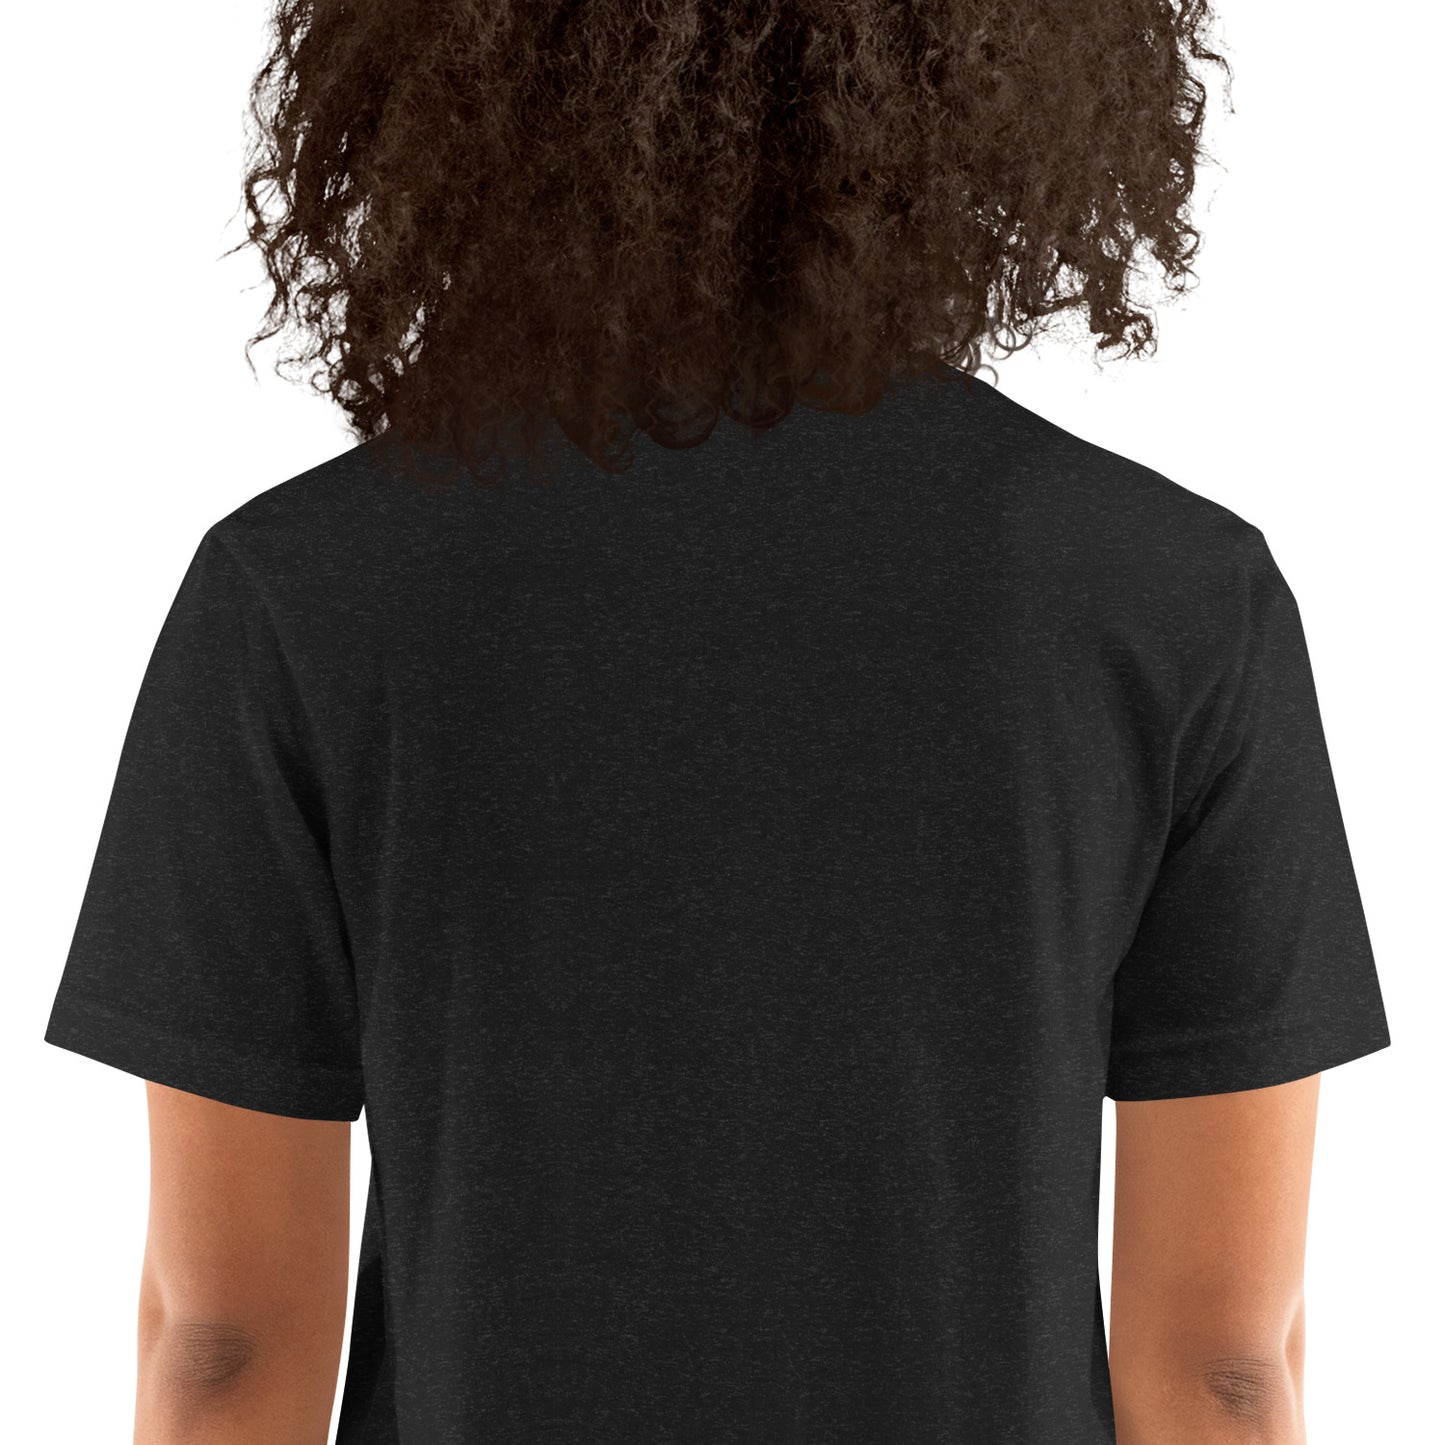 Zoltar Graphic T Shirt, Short Sleeve Cool Shirt, Cool Graphic Tee, Inspirational Summer Shirt, Cool Trending Shirt, Cotton Tshirt